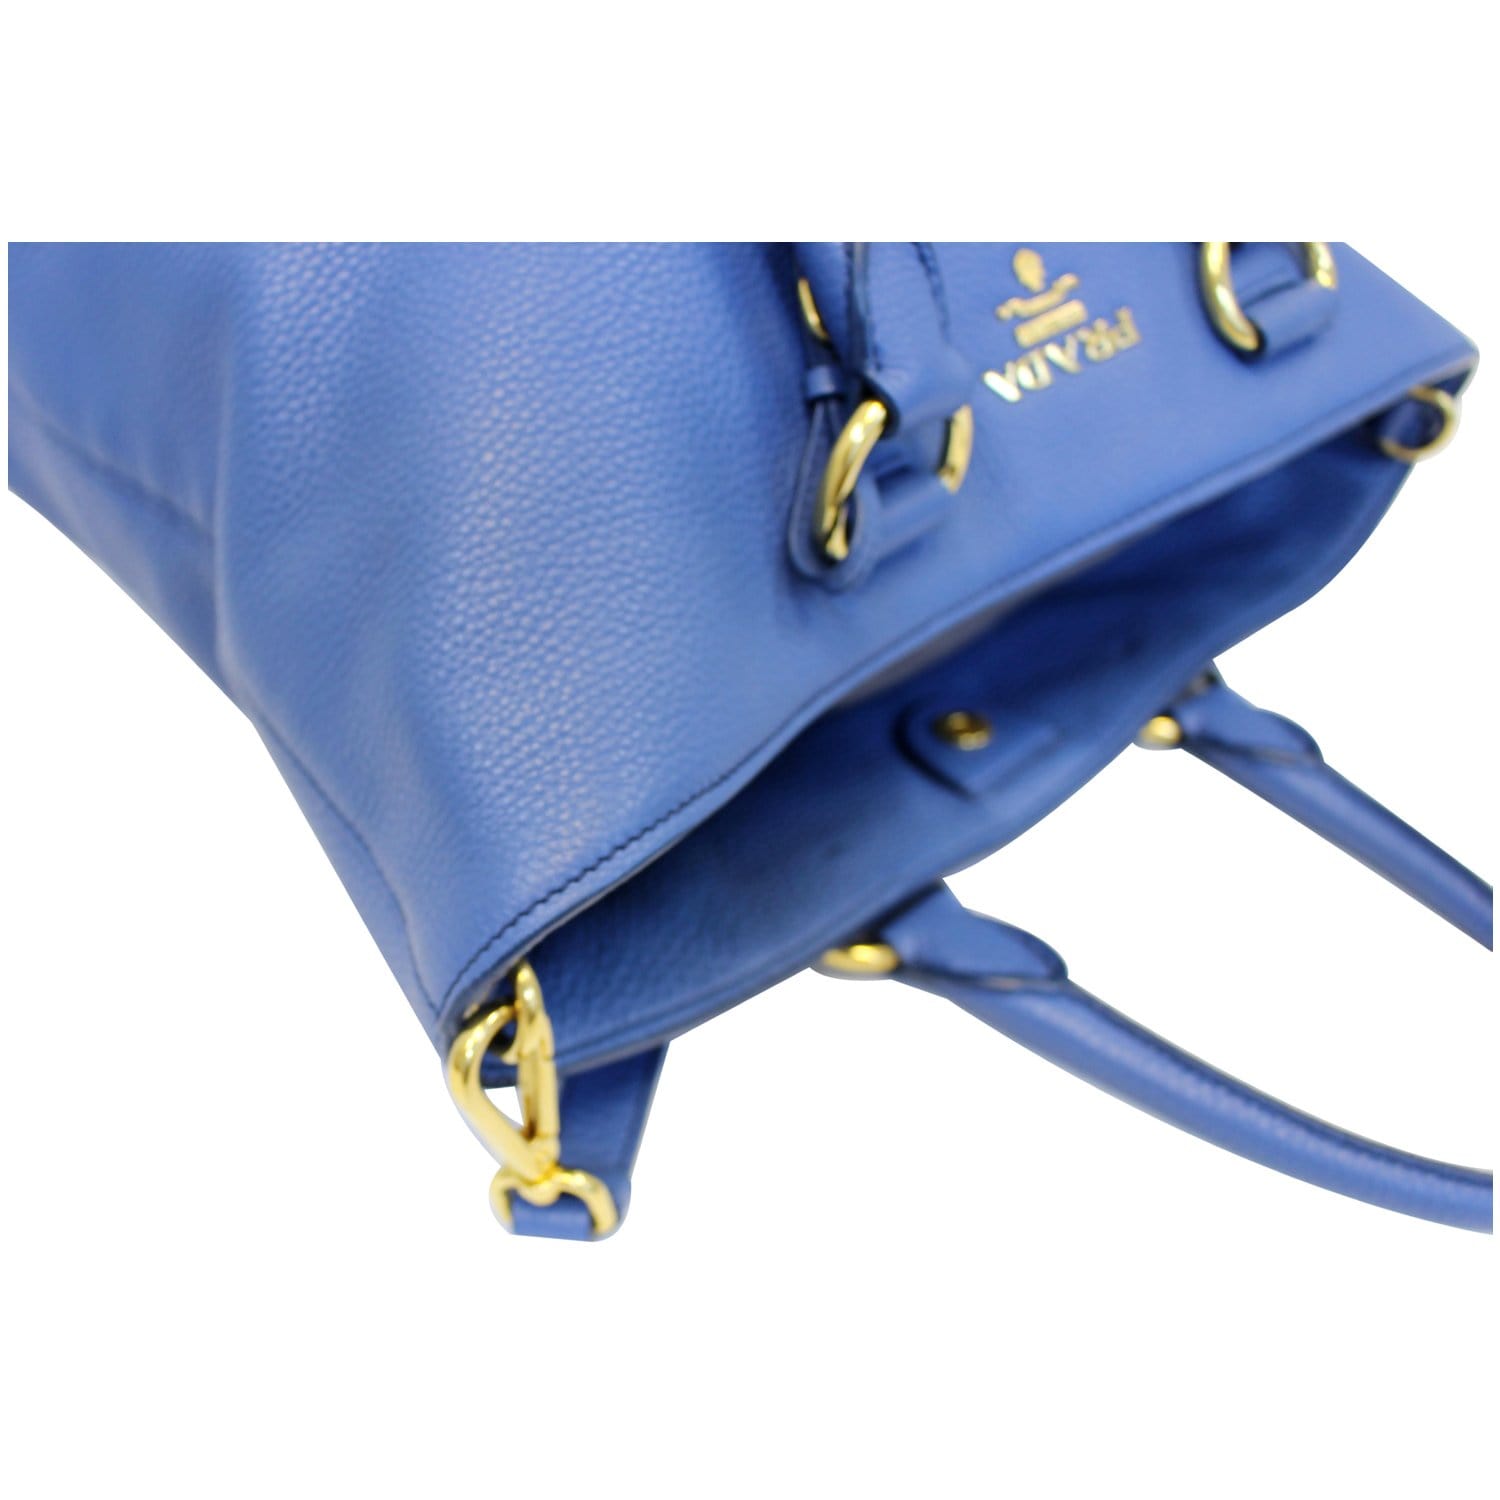 Prada Vitello Phenix Shopping Tote Cobalt Blue in Leather with Gold-tone -  US